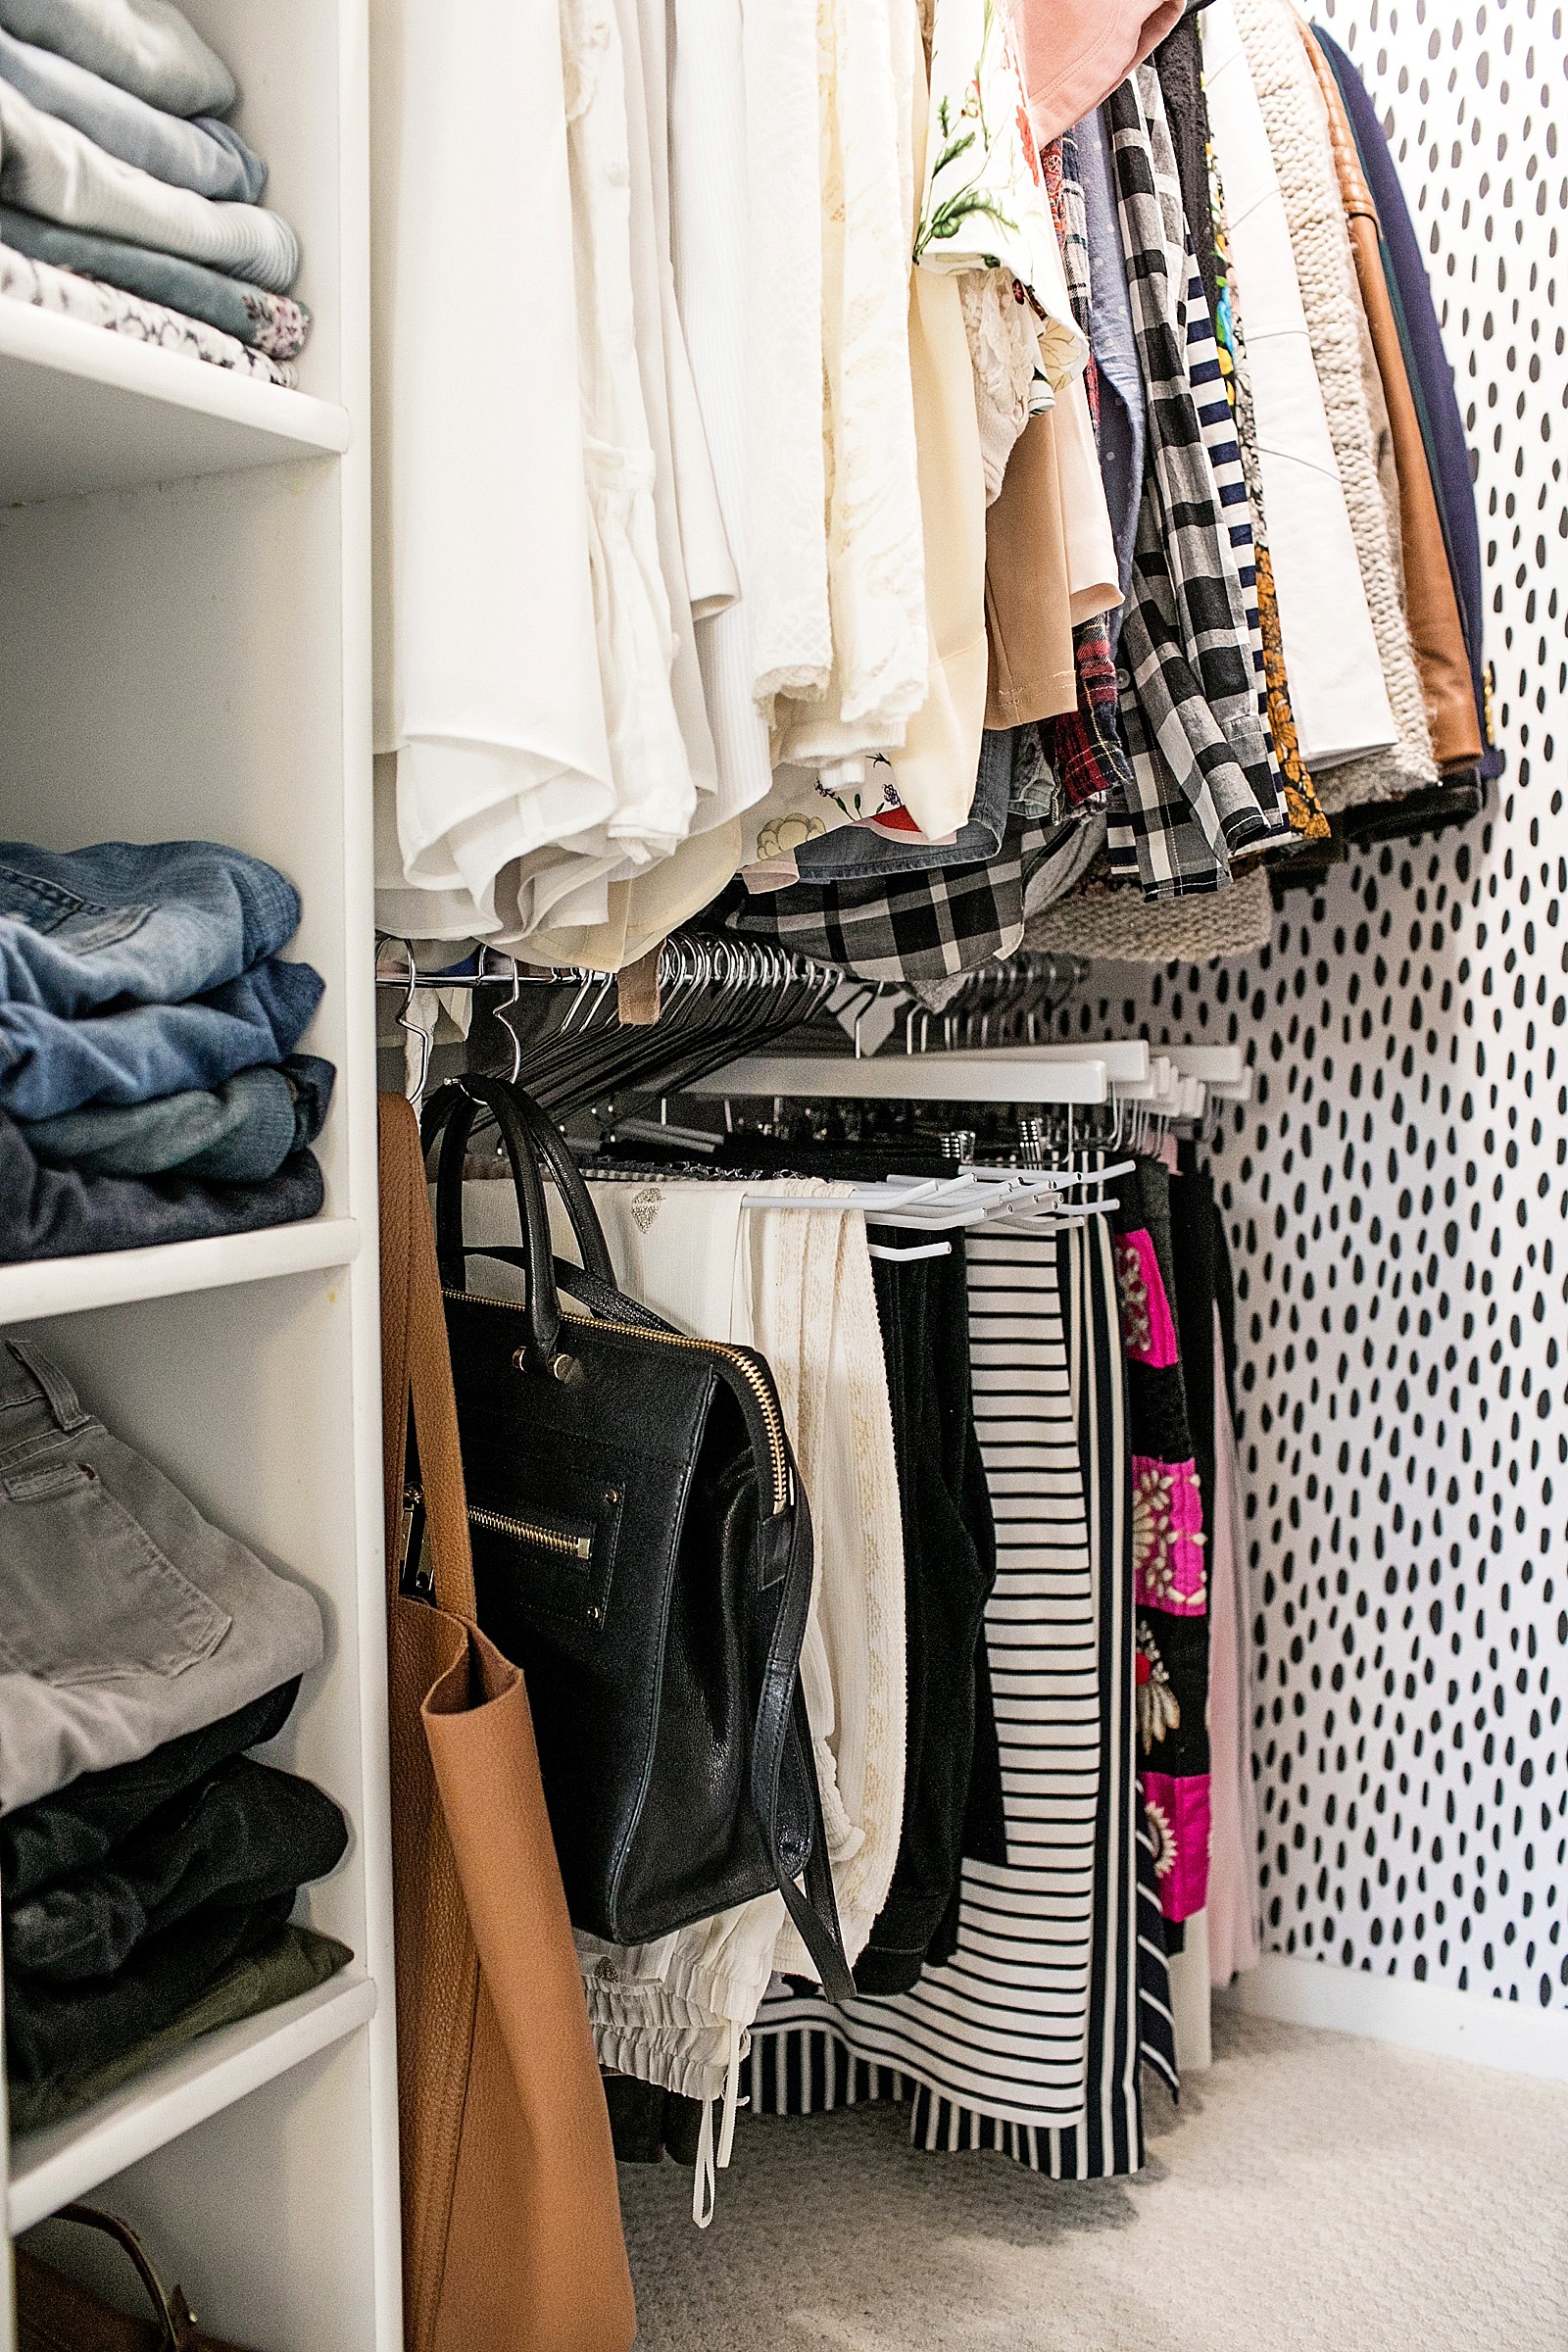 white wood pant hangers on chrome oval rods and purse hooks to keep a tiny closet organized